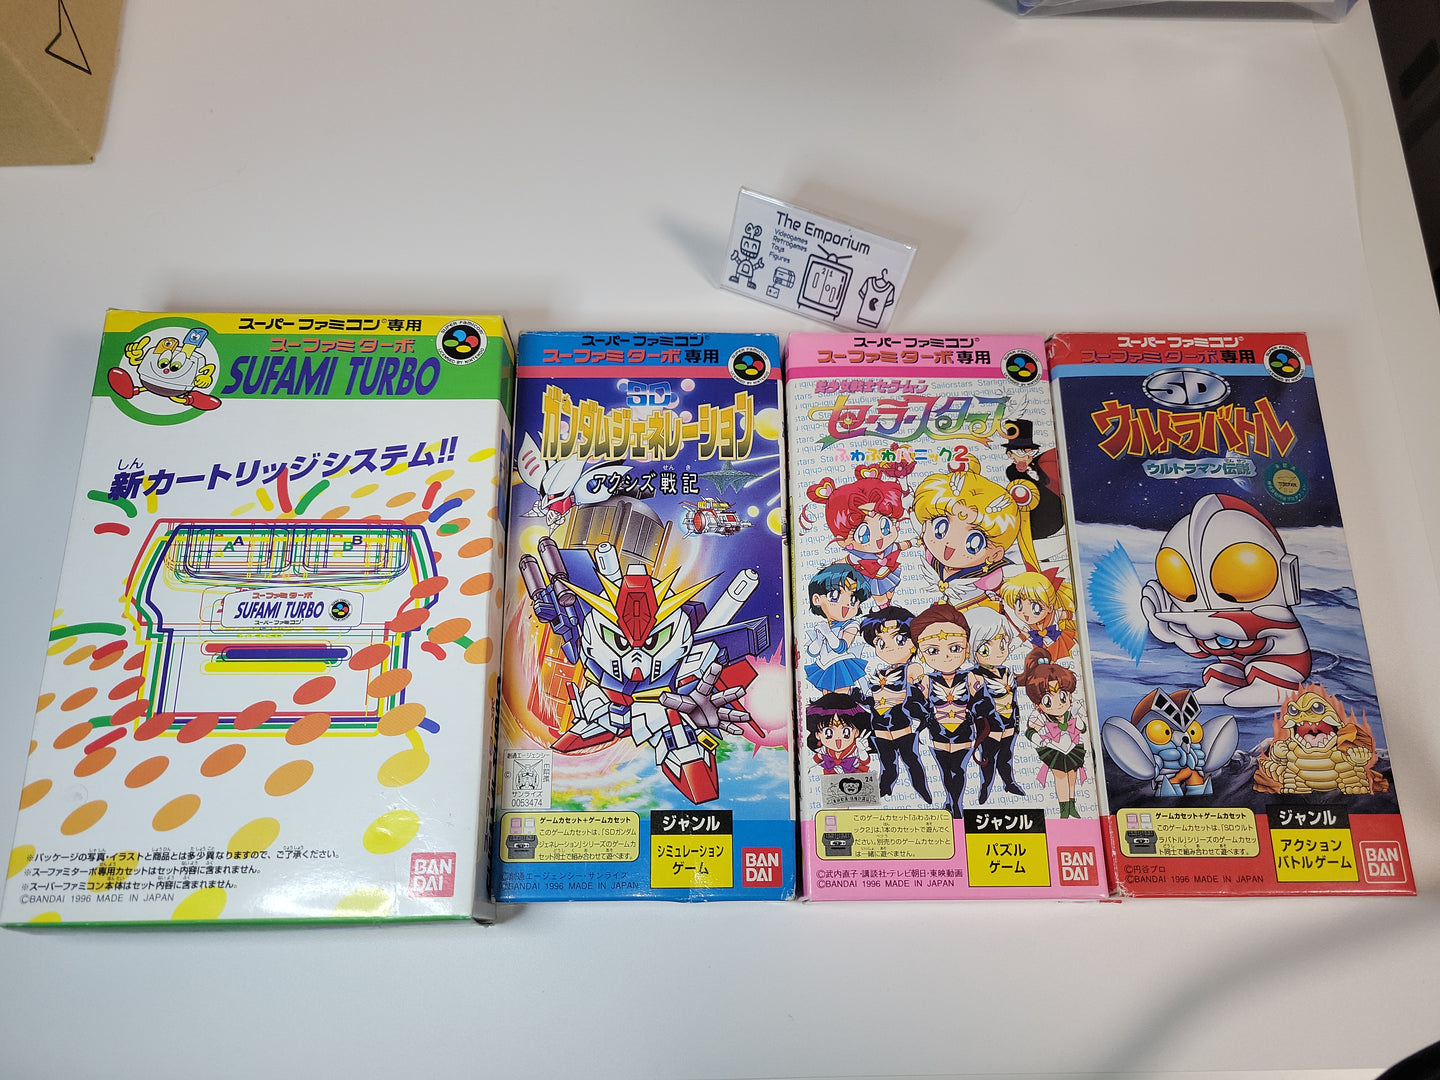 Sufami Turbo + 3 Games - Nintendo Sfc Super Famicom